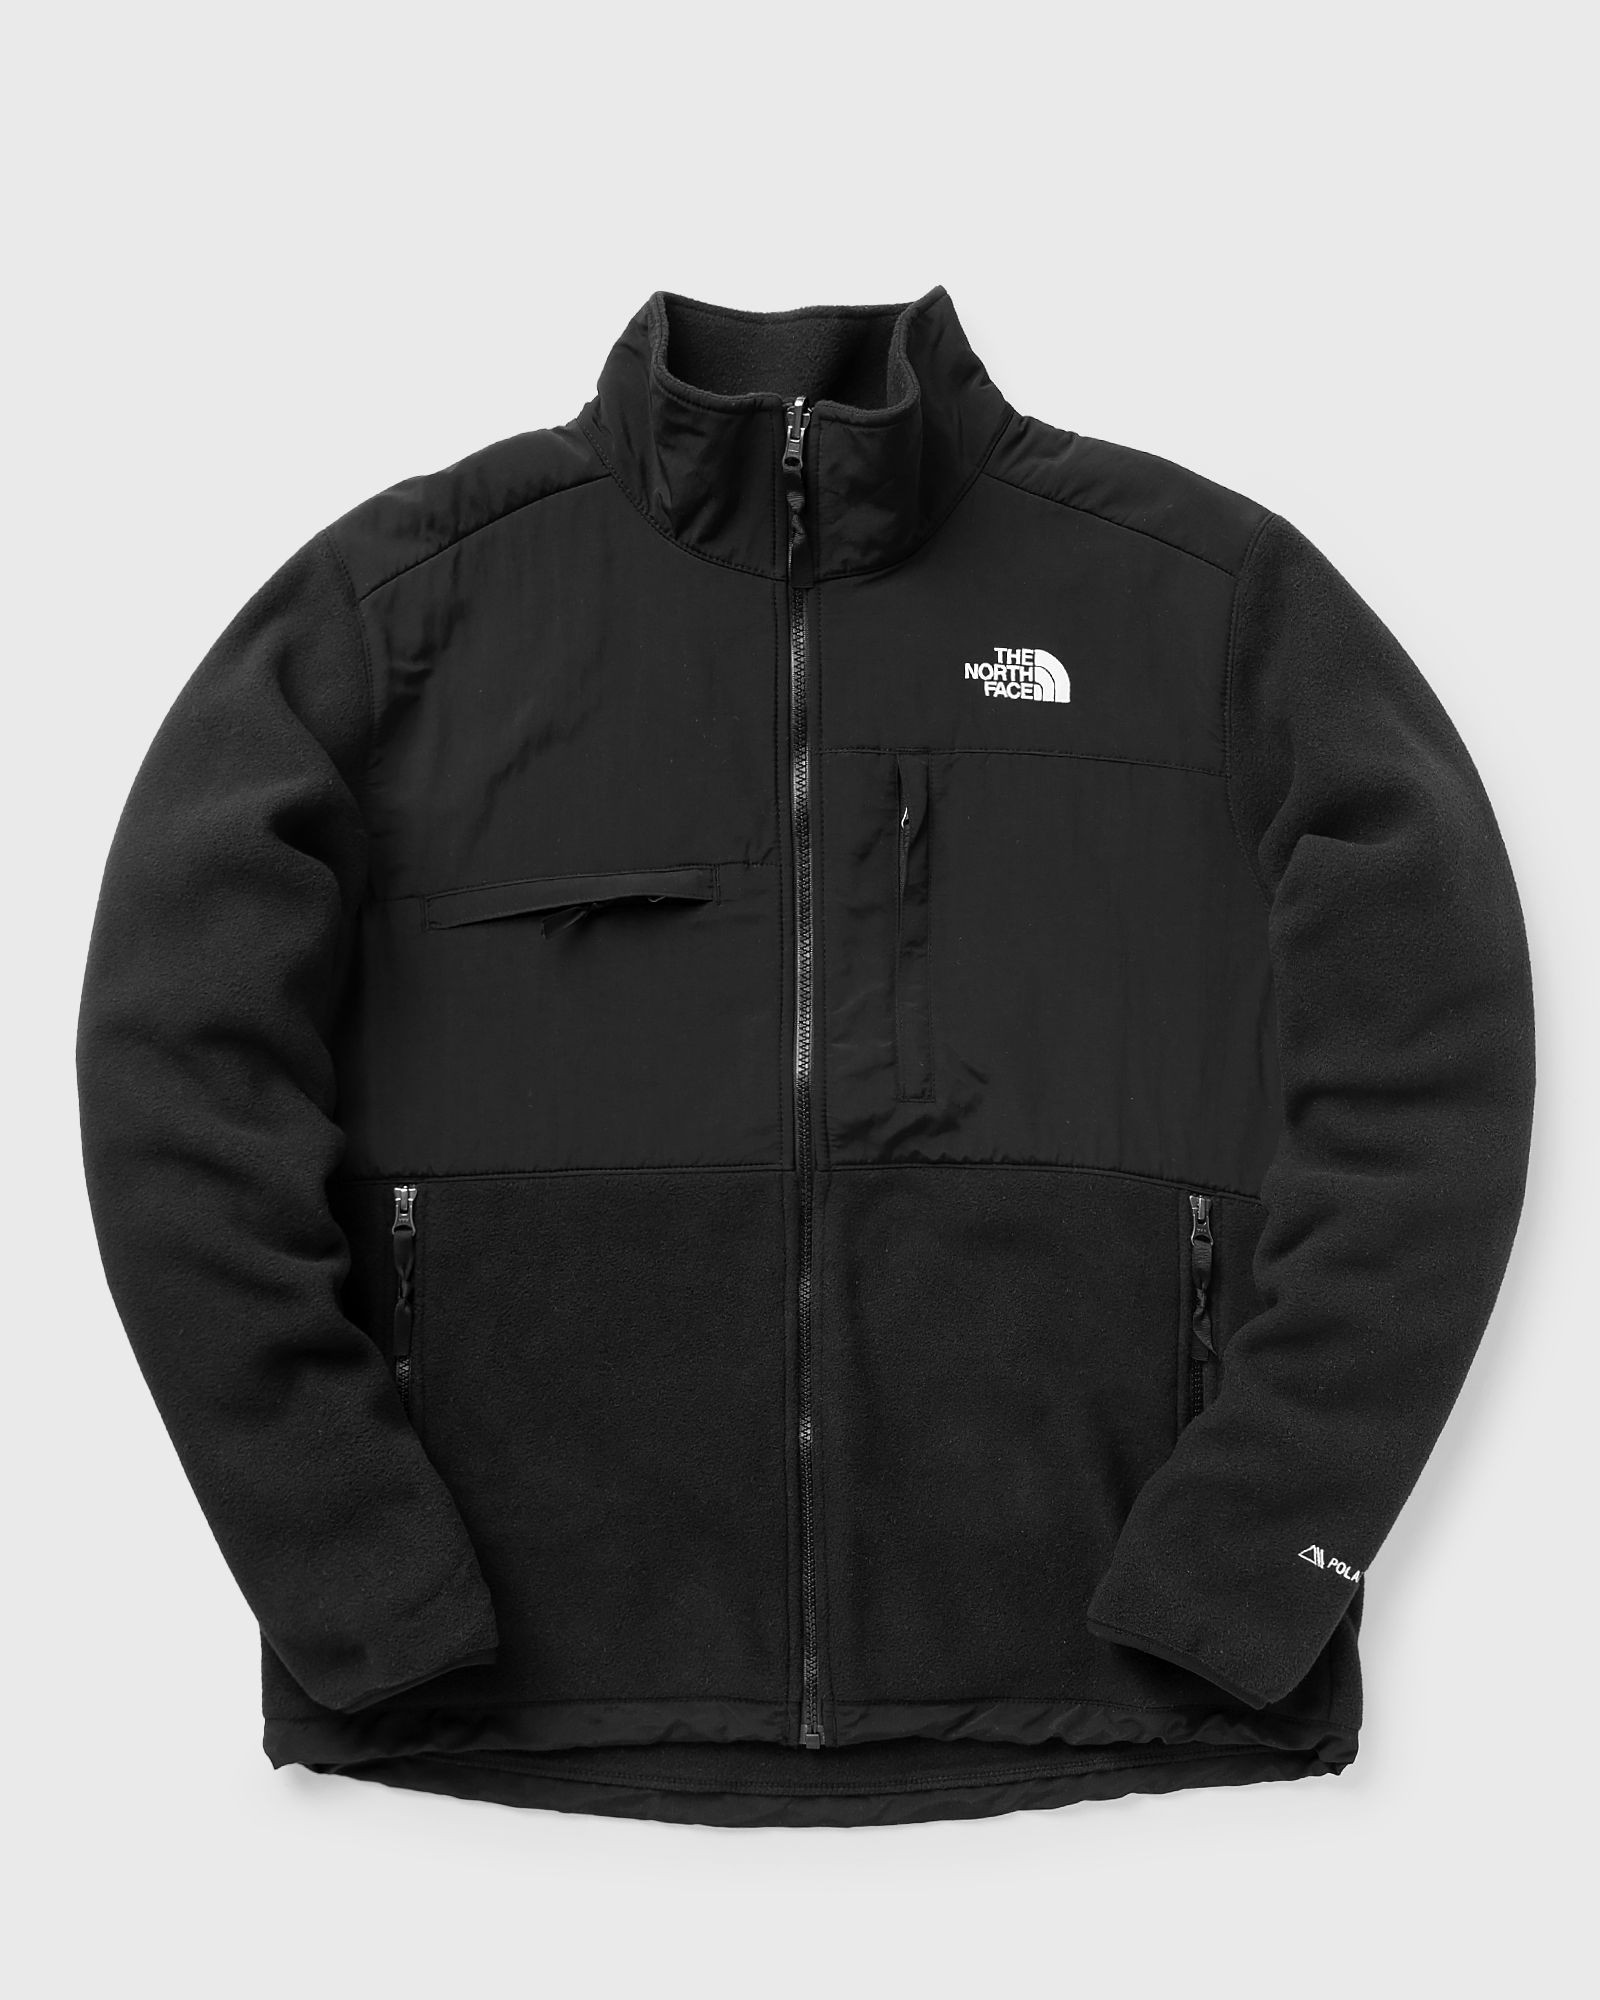 The North Face - denali jacket men fleece jackets black in größe:xl